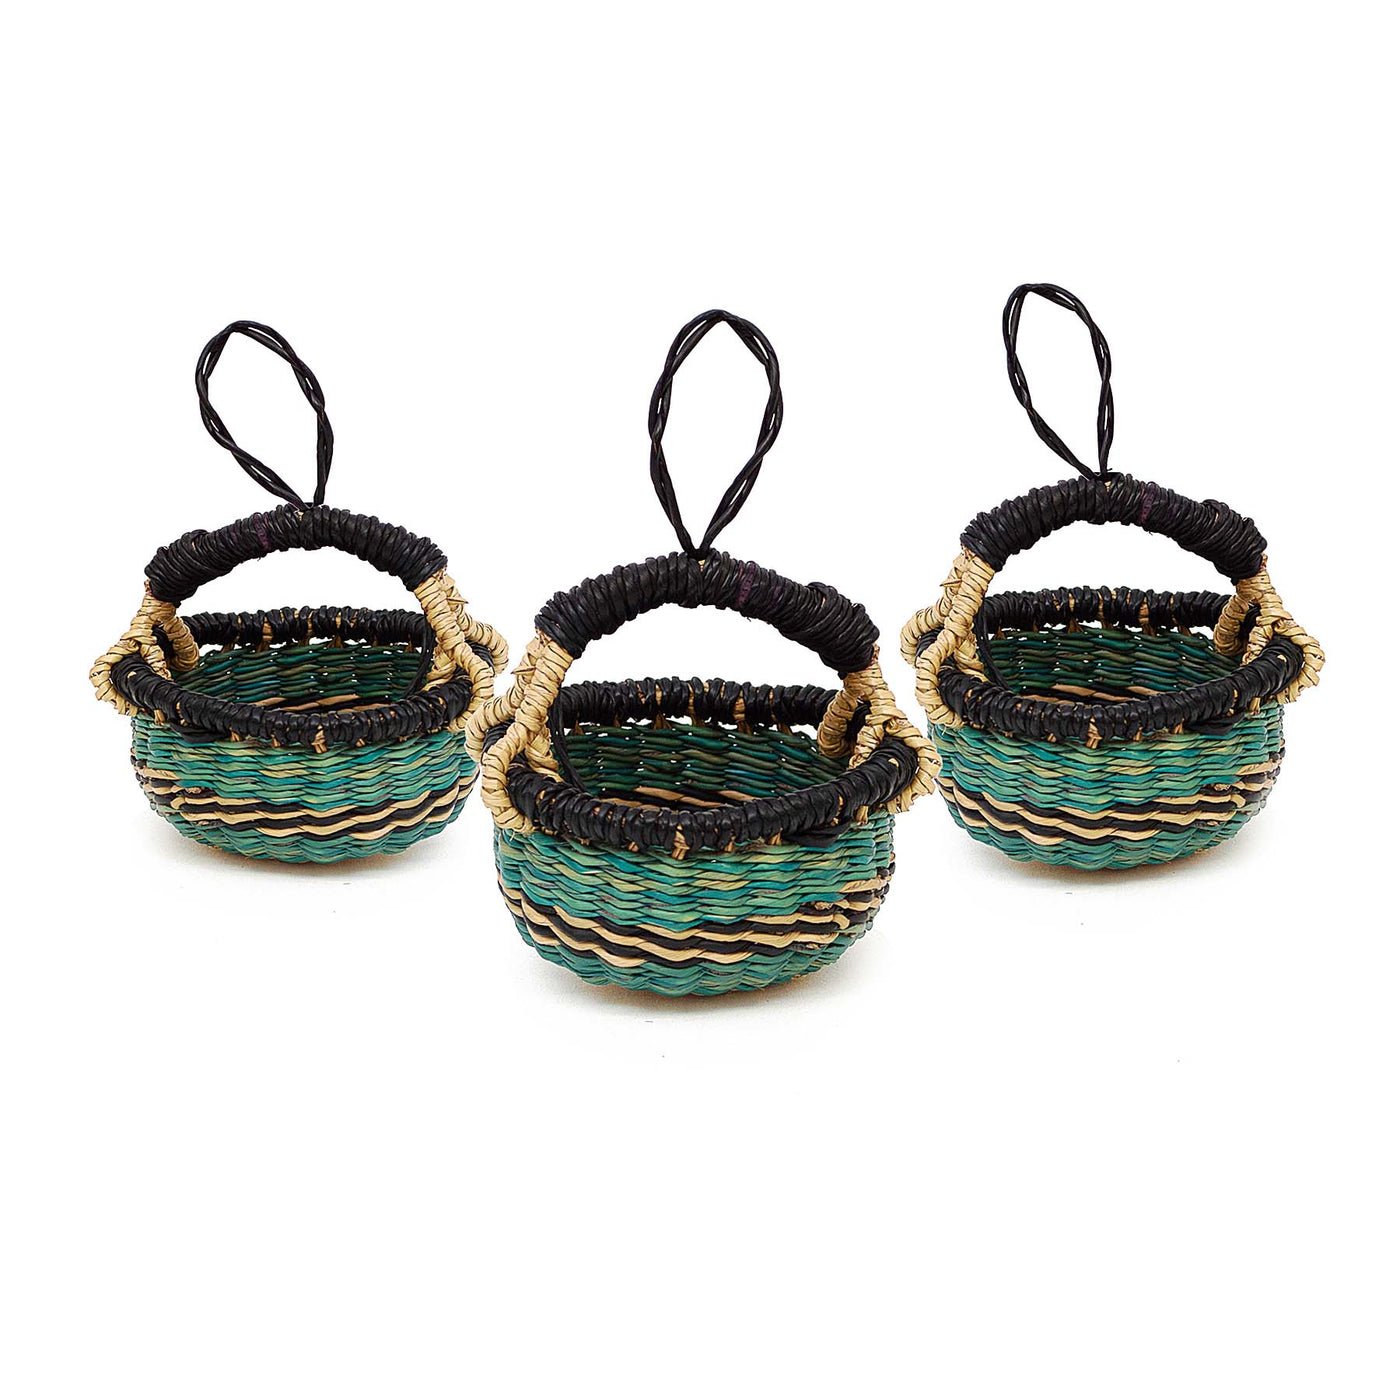 Petite Blue Bolga Basket Ornaments, Set of 3